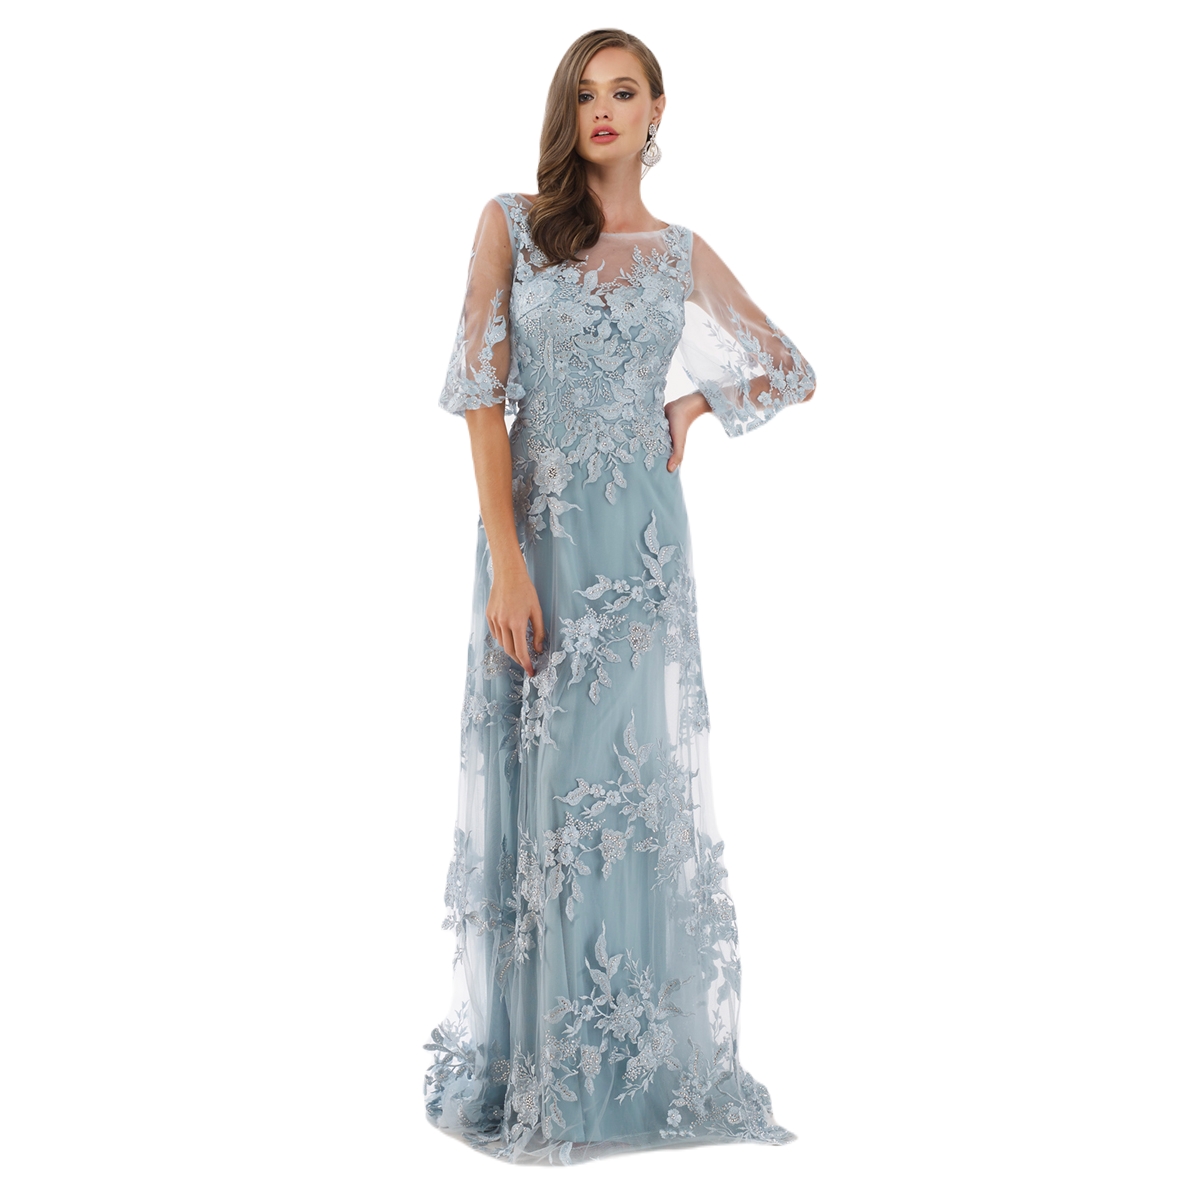 Vintage Prom Dresses, Homecoming Dress Lara Cape Sleeves A-line Lace Gown - Dusk $598.00 AT vintagedancer.com